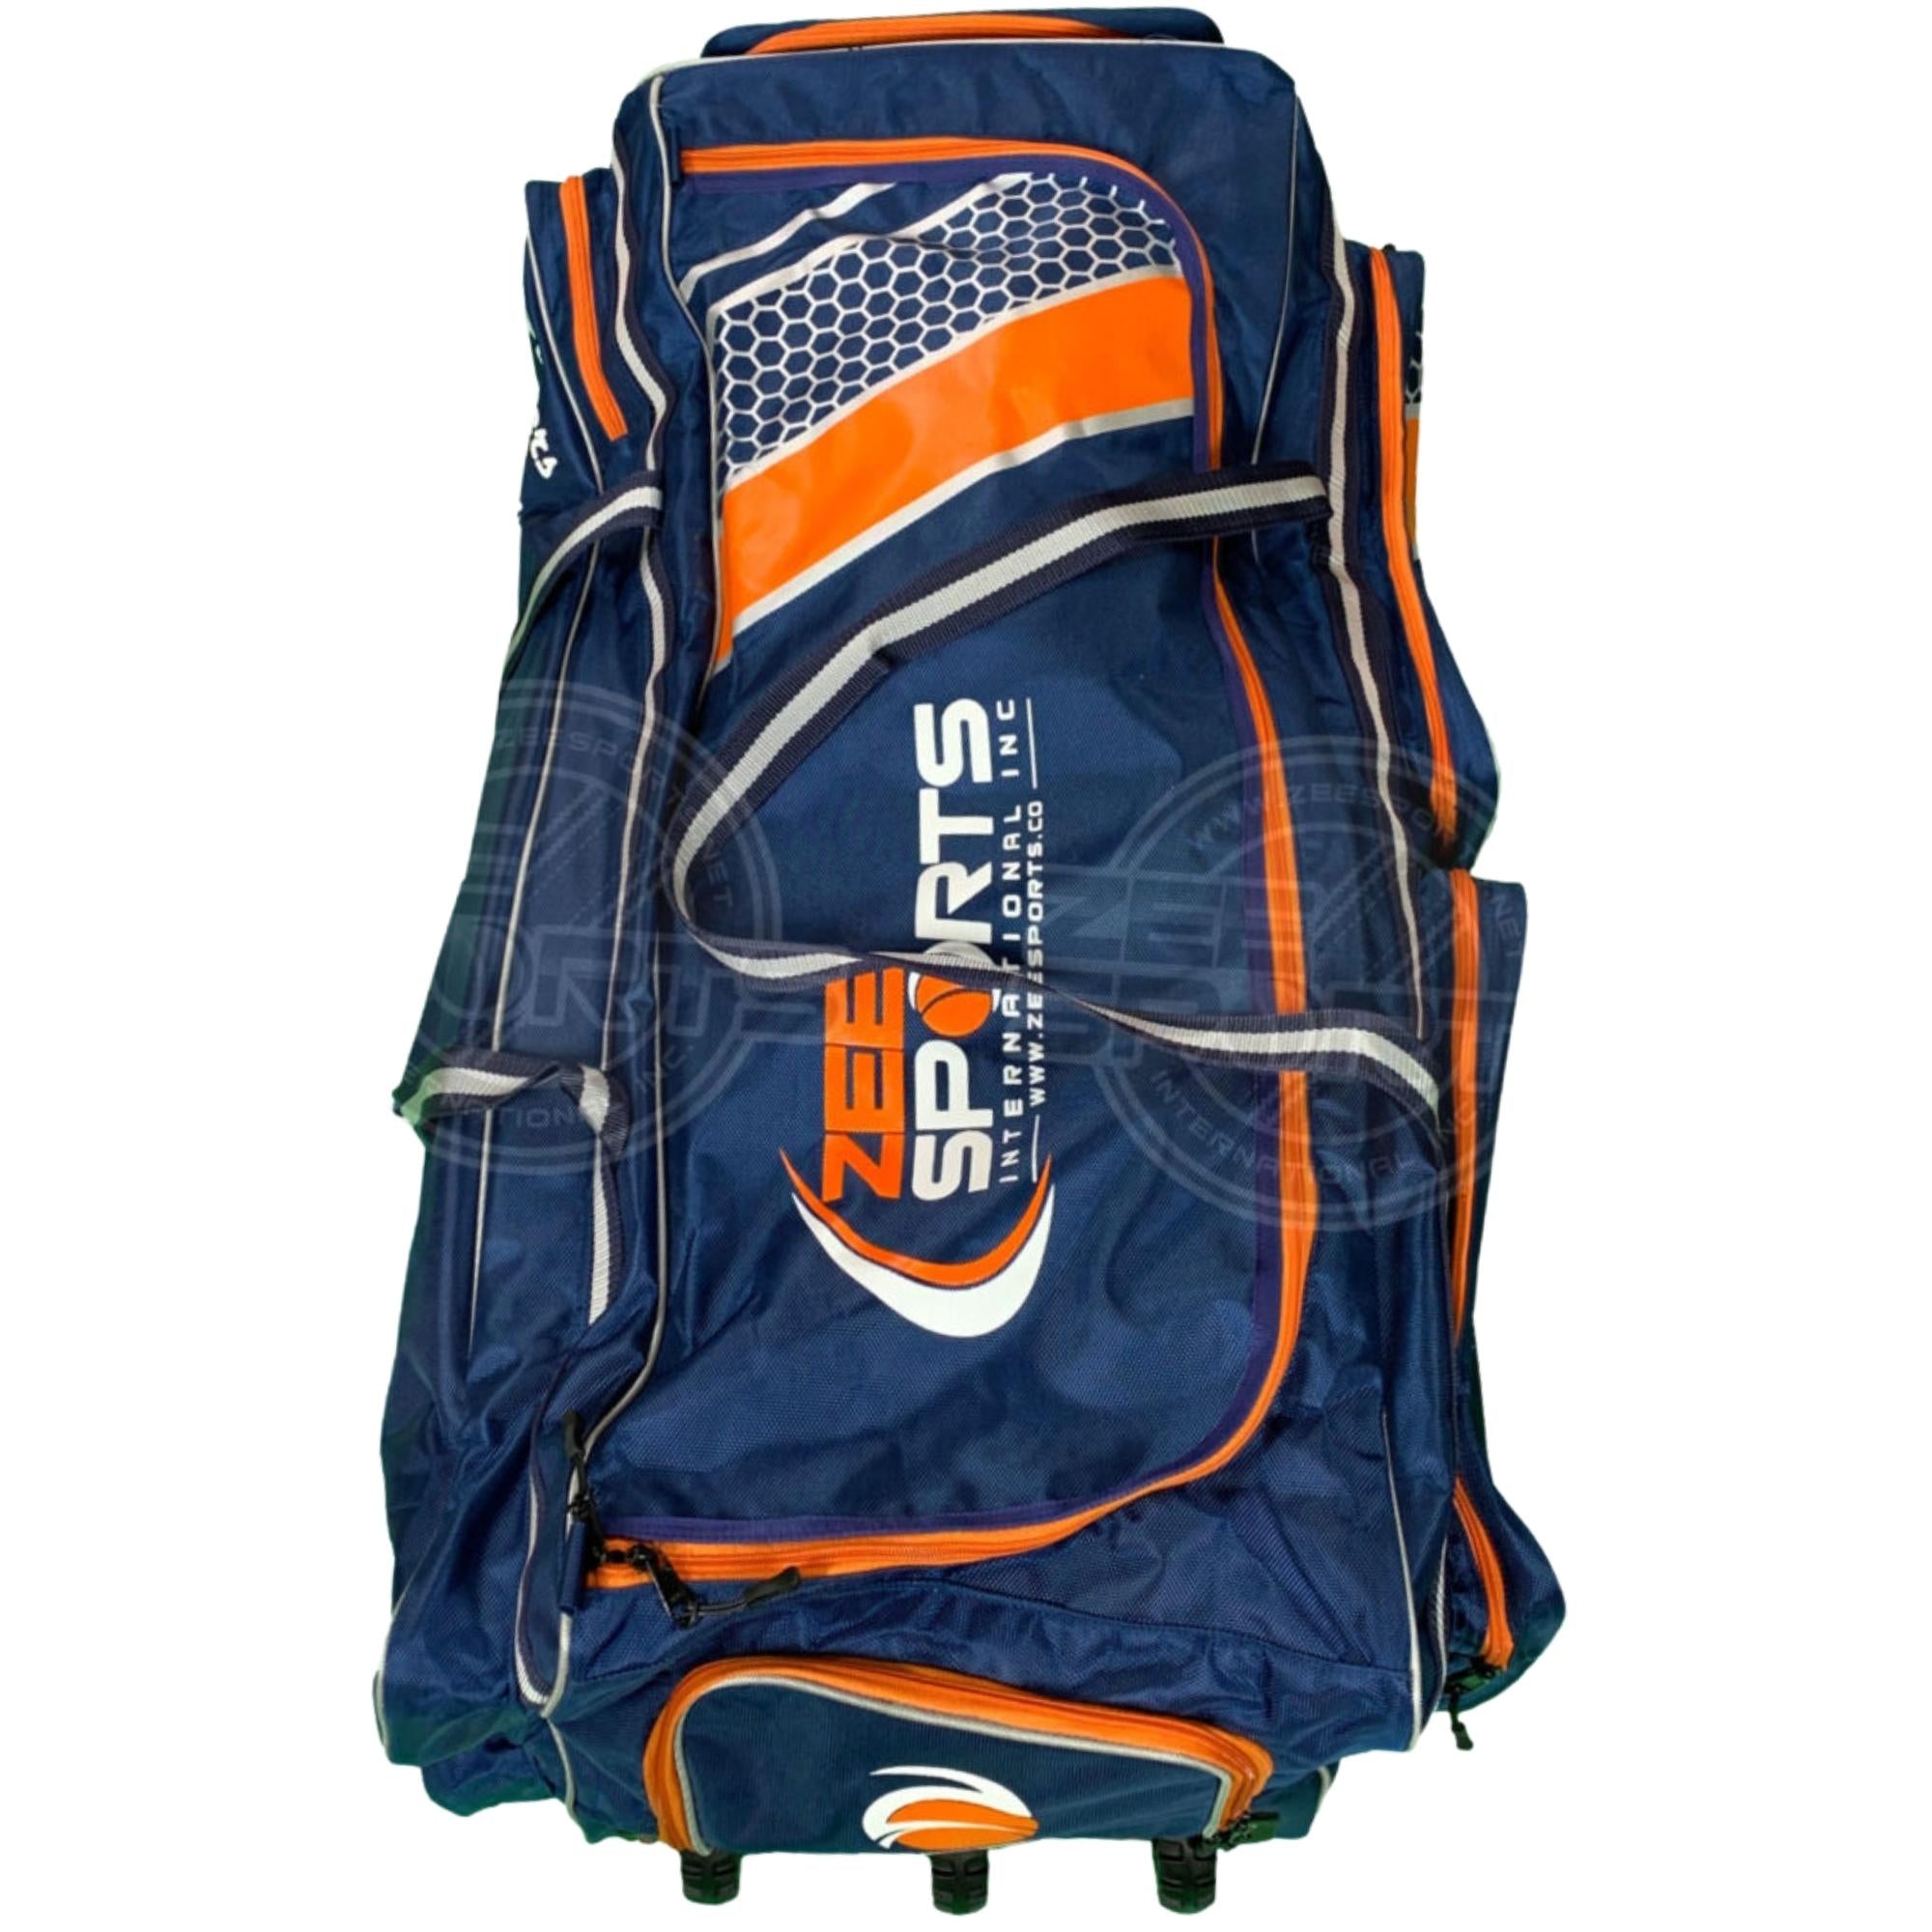 Zee Sports Cricket Kit Bag Orange & Navy Blue Player's Edition